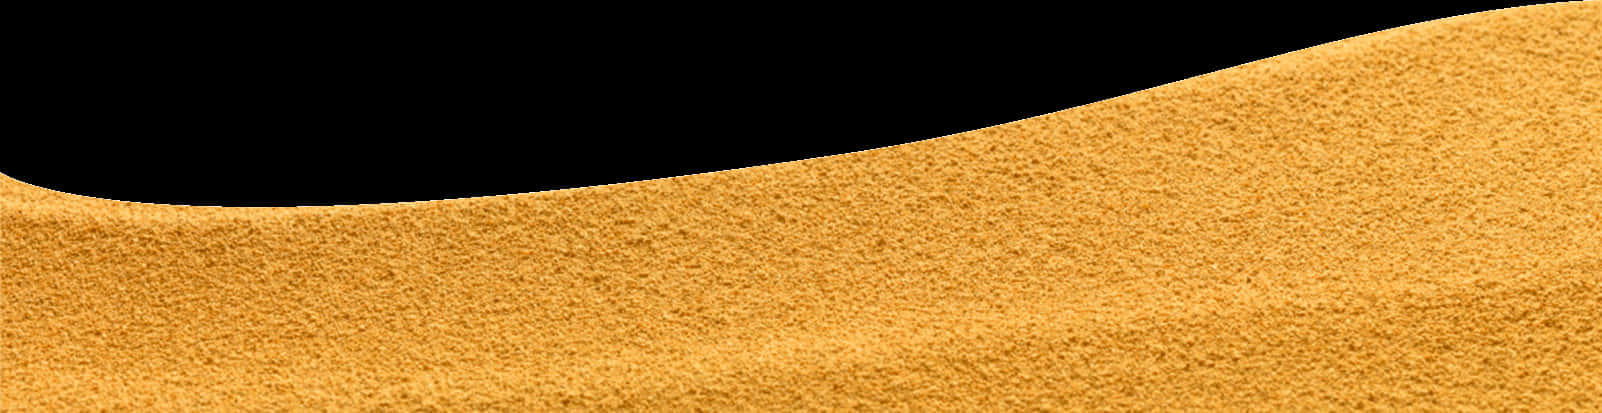 Golden Sand Wave Texture PNG image